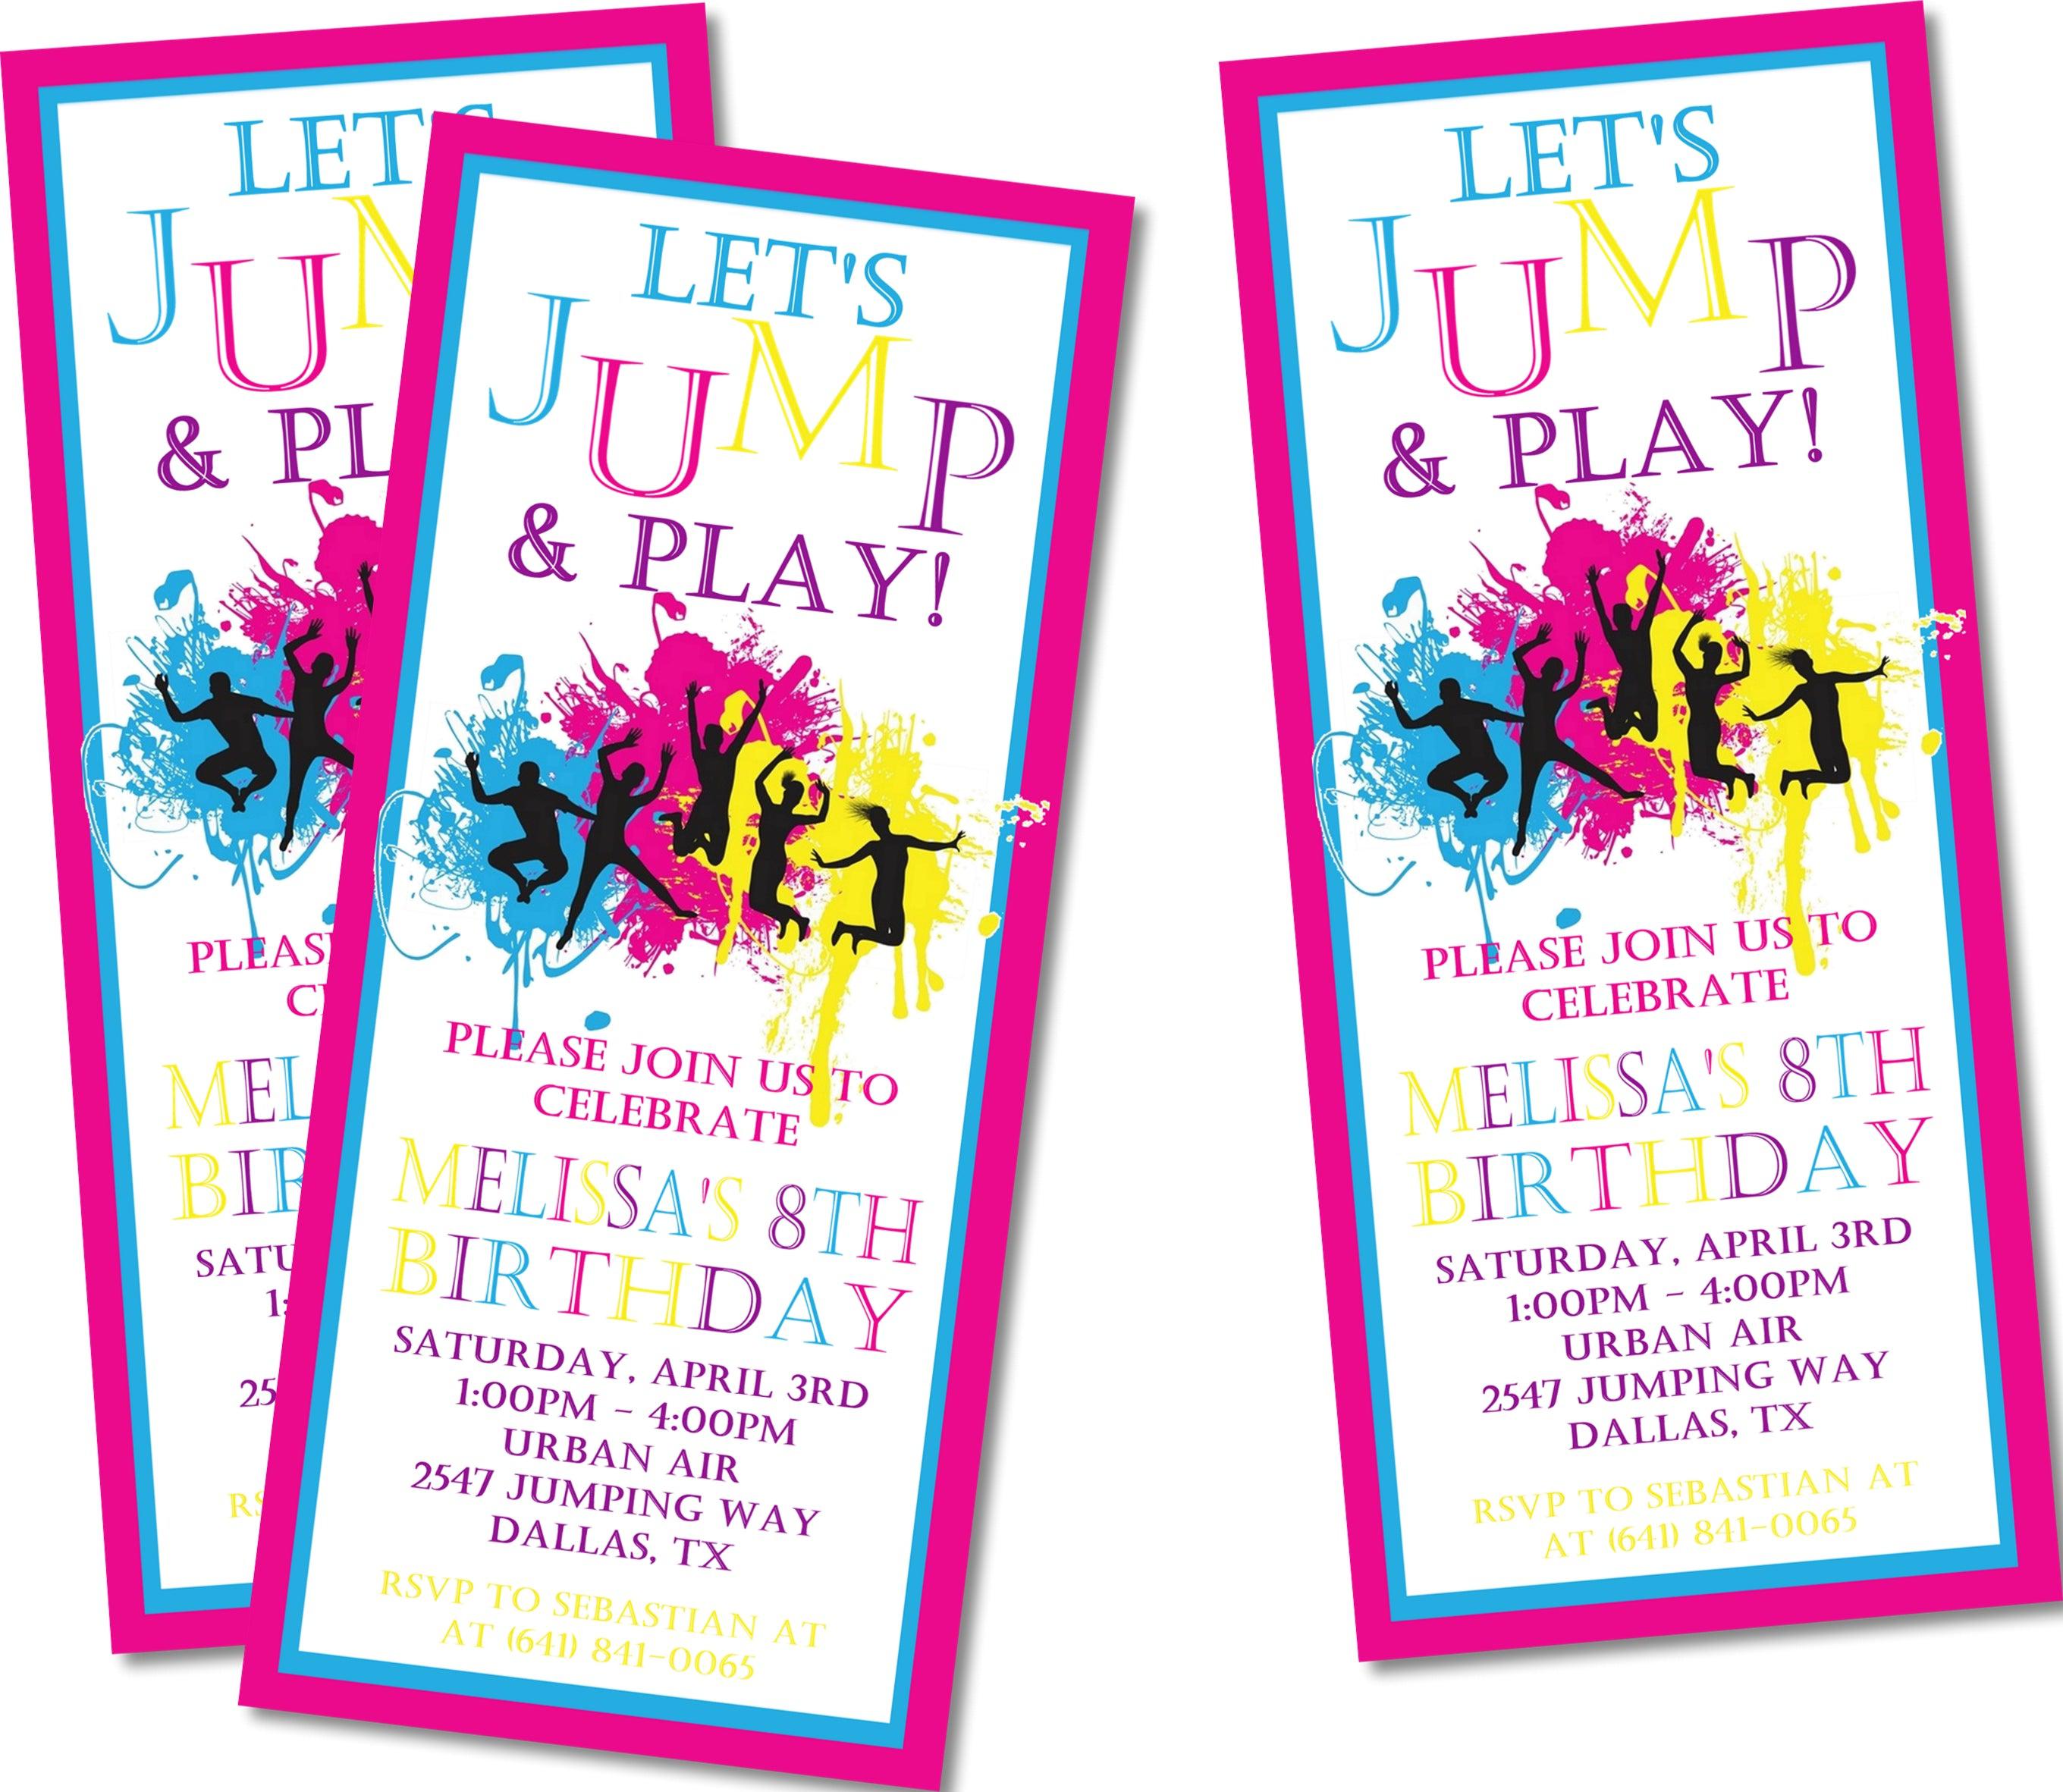 Trampoline Park Birthday Party Ticket Invitations